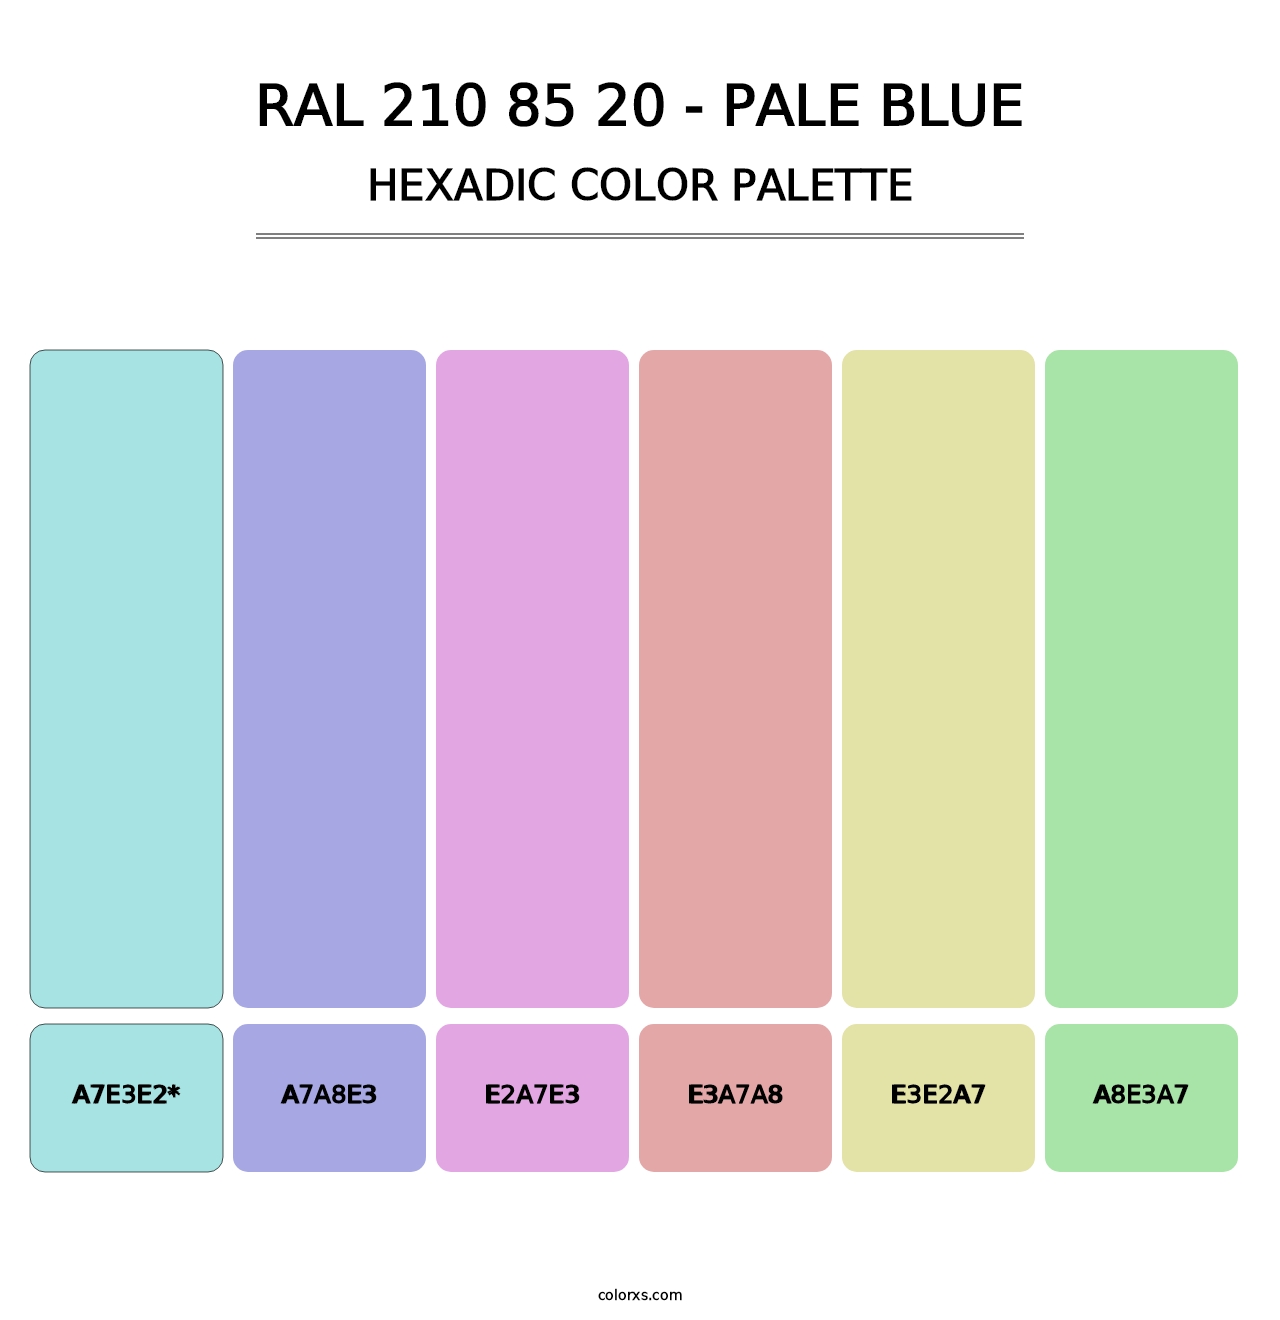 RAL 210 85 20 - Pale Blue - Hexadic Color Palette